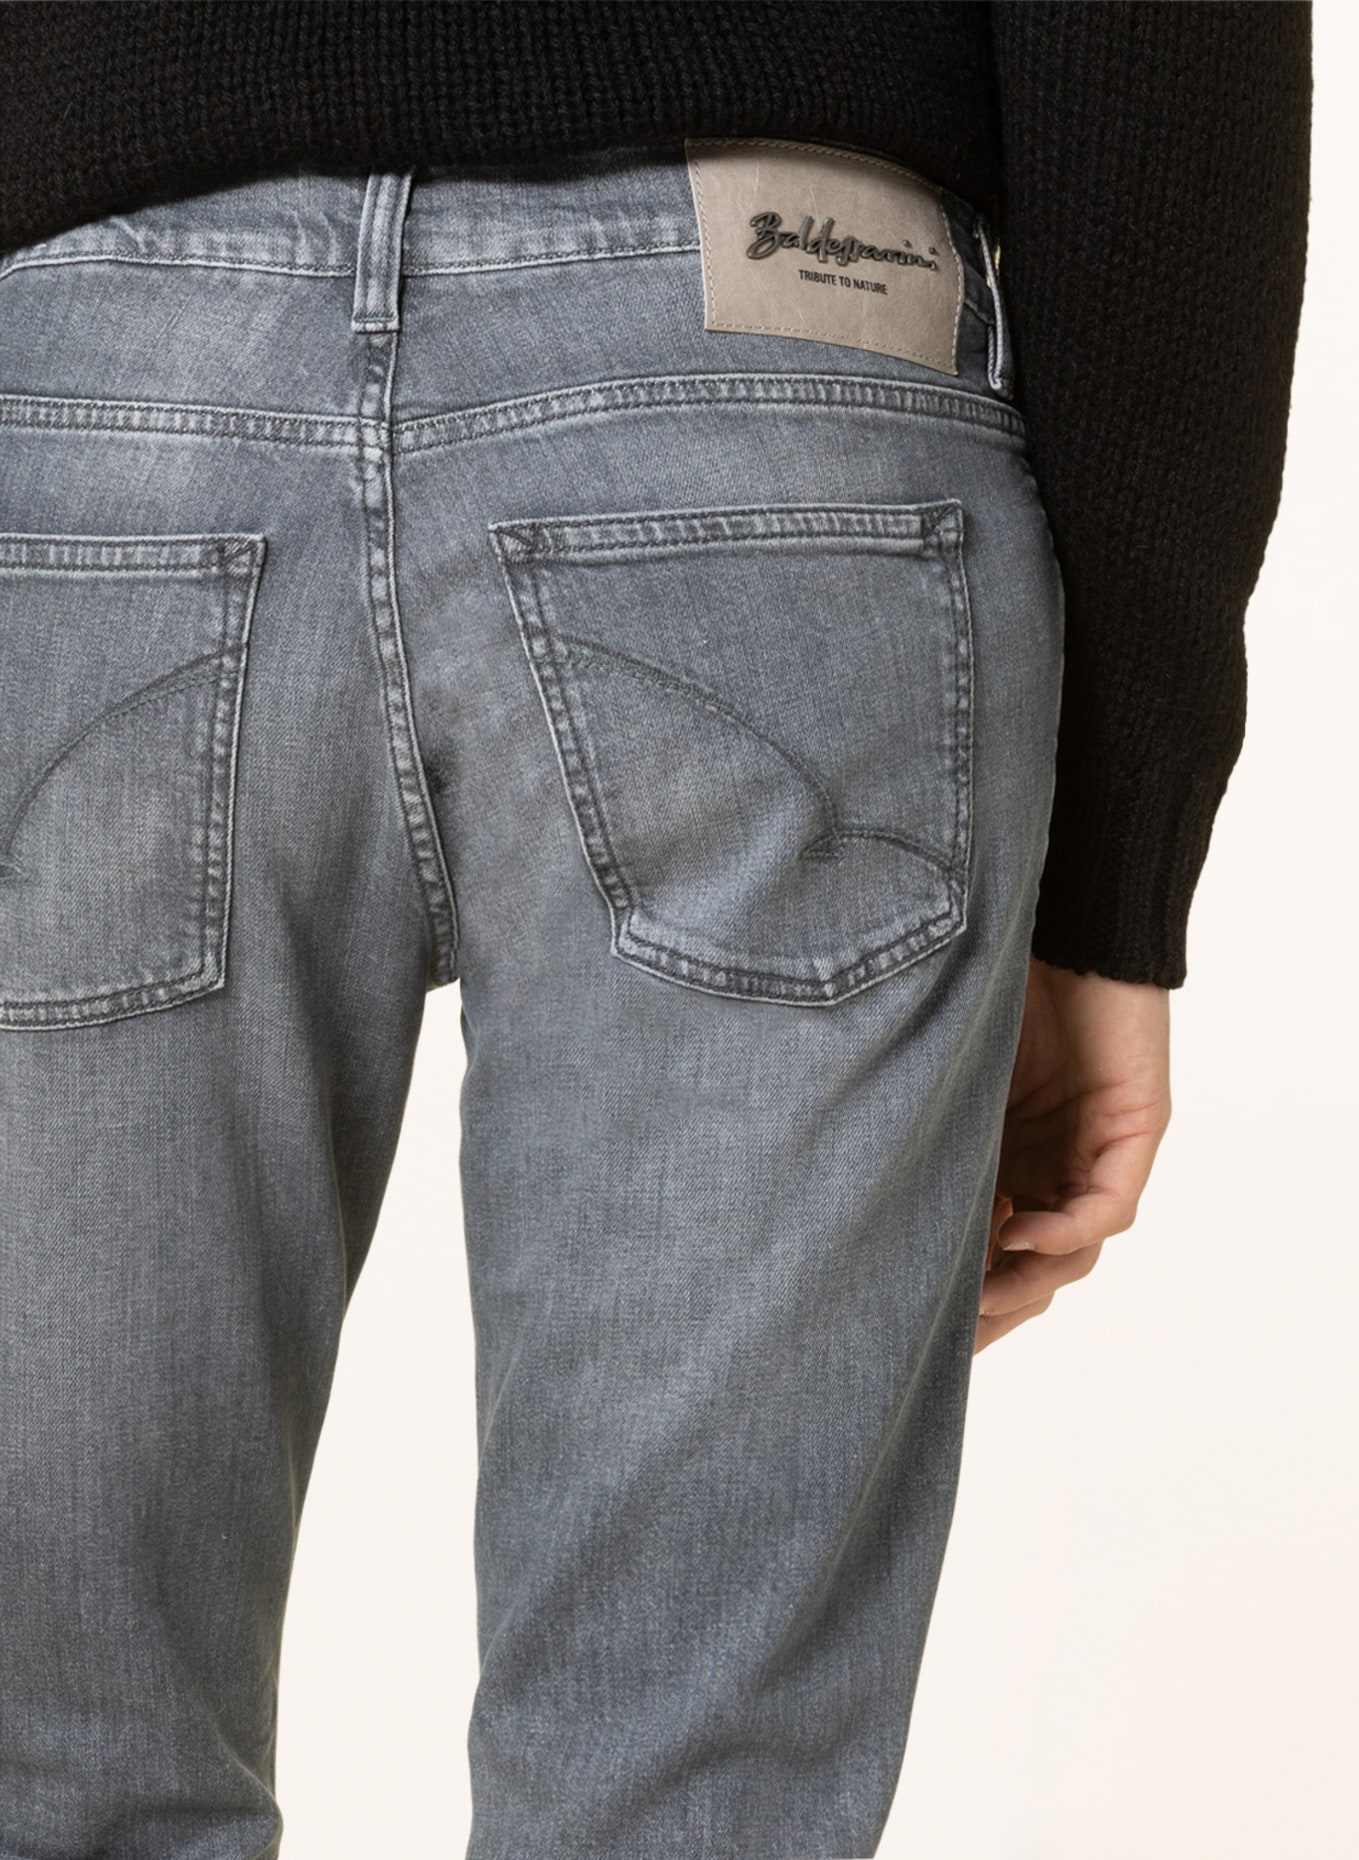 BALDESSARINI Jeans Extra Slim Fit , Farbe: 94 94 (Bild 5)